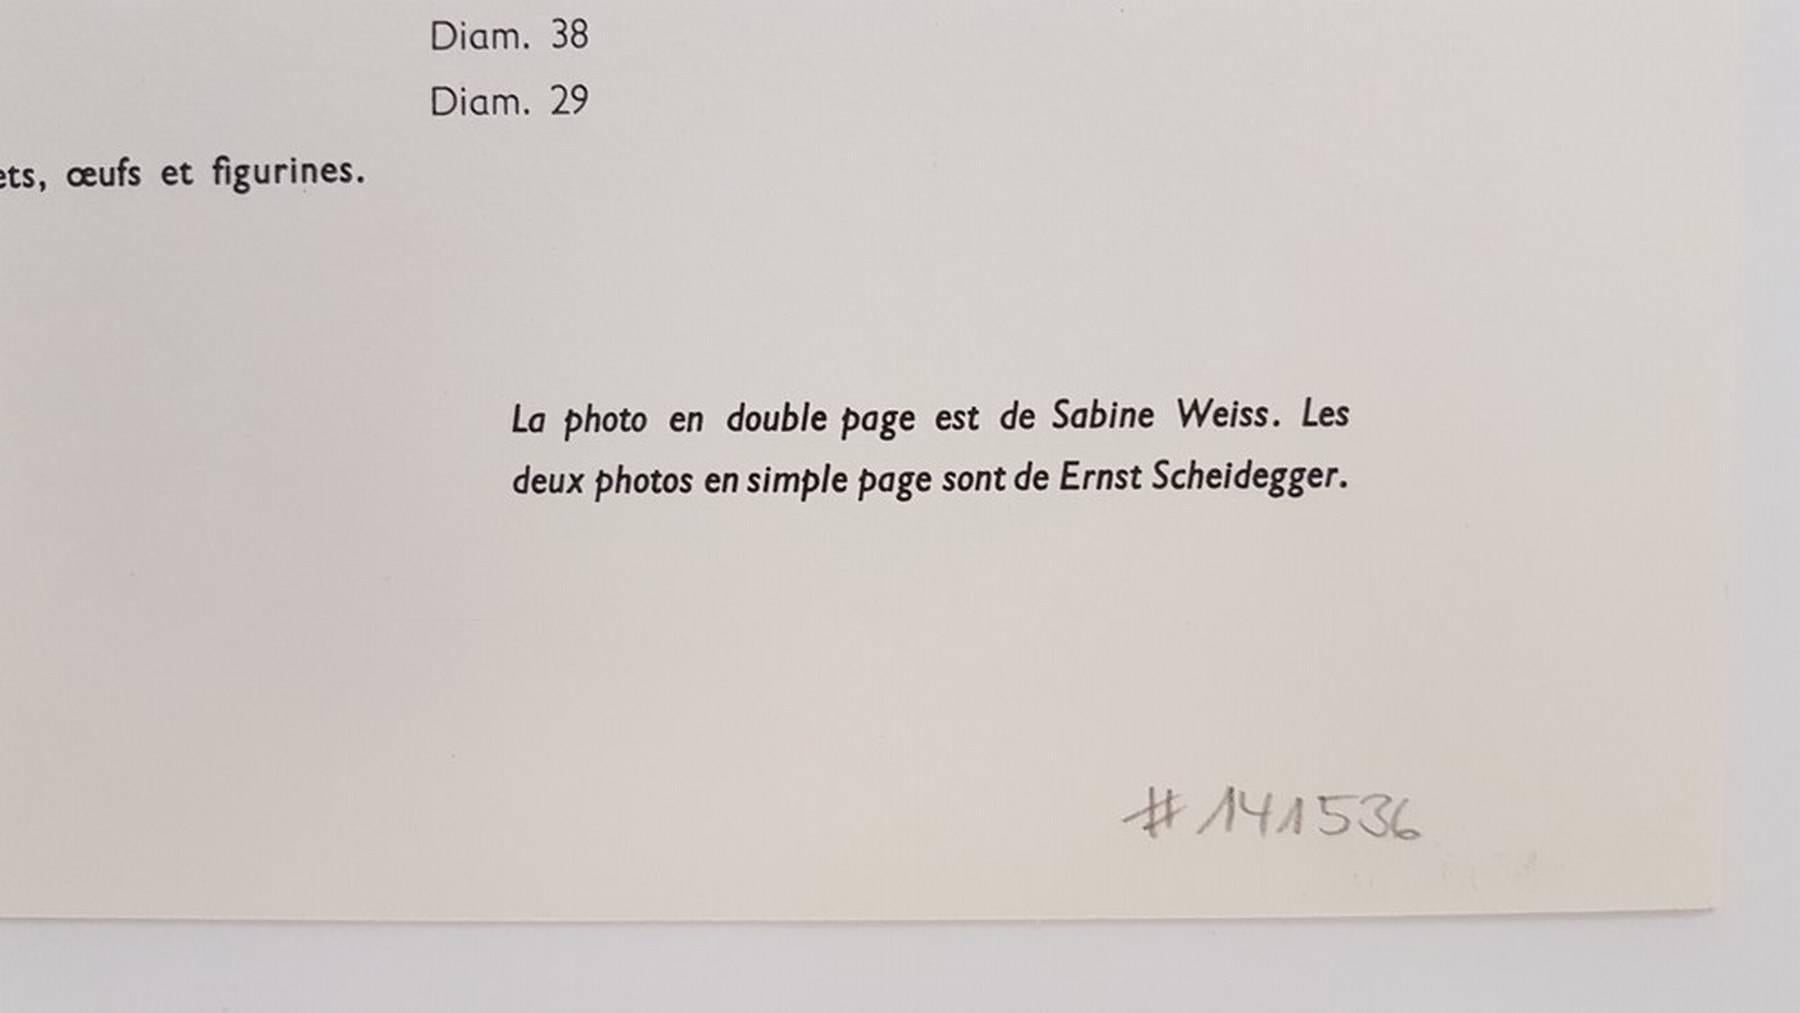 Catalogue raisonné: Cramer 34
Color lithograph, year: 1956, Publisher: Maeght Editeur Paris
Condition: in mint condition
Size: 14.8 × 10.9 inches

Joan Miró i Ferrà (1893 – 1983) was a Spanish painter, sculptor, and ceramicist born in Barcelona. A